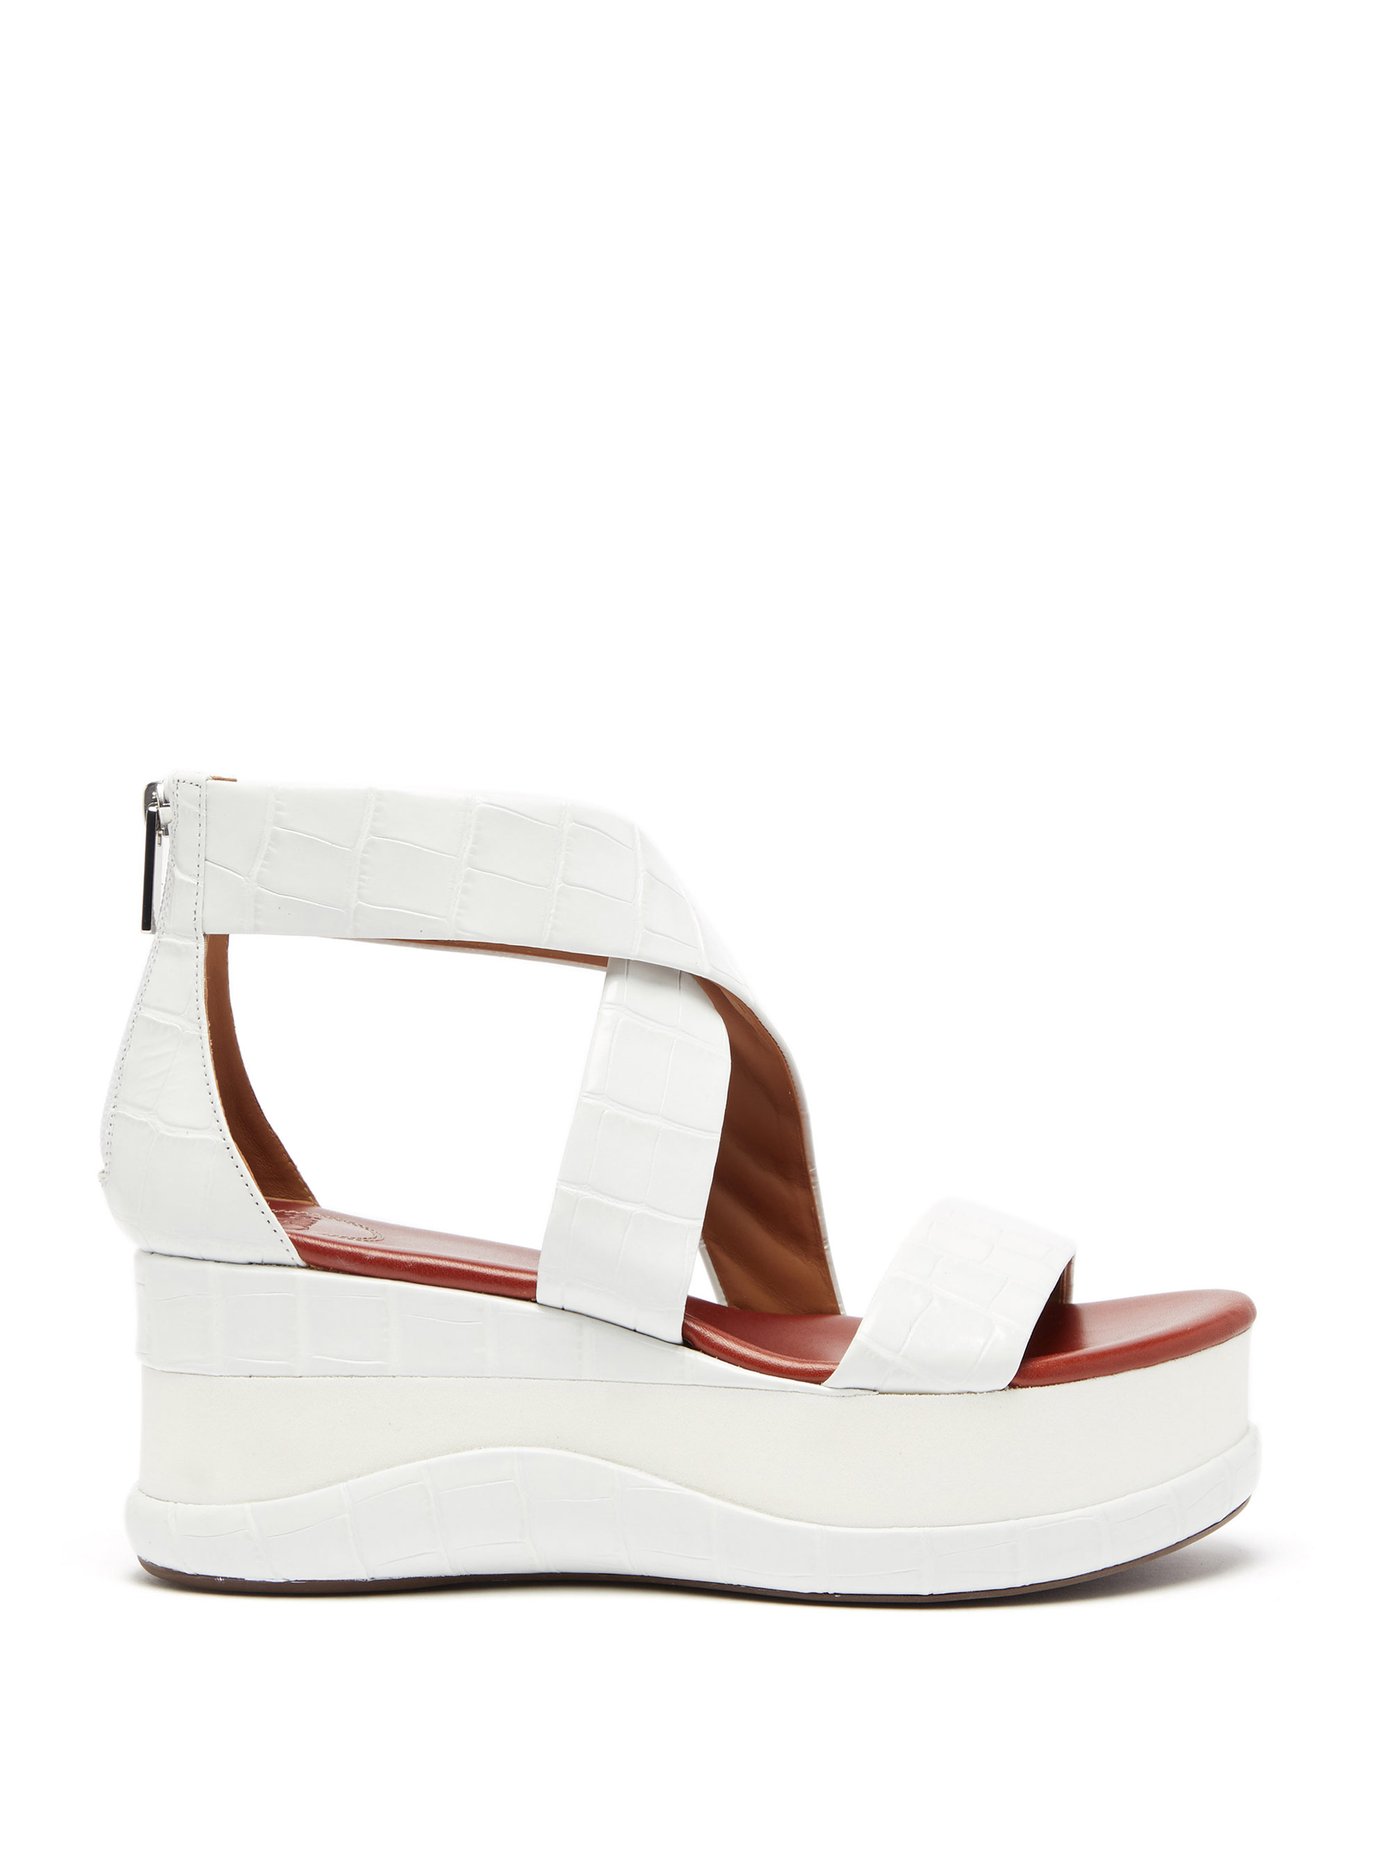 white croc faux leather flatform sandal